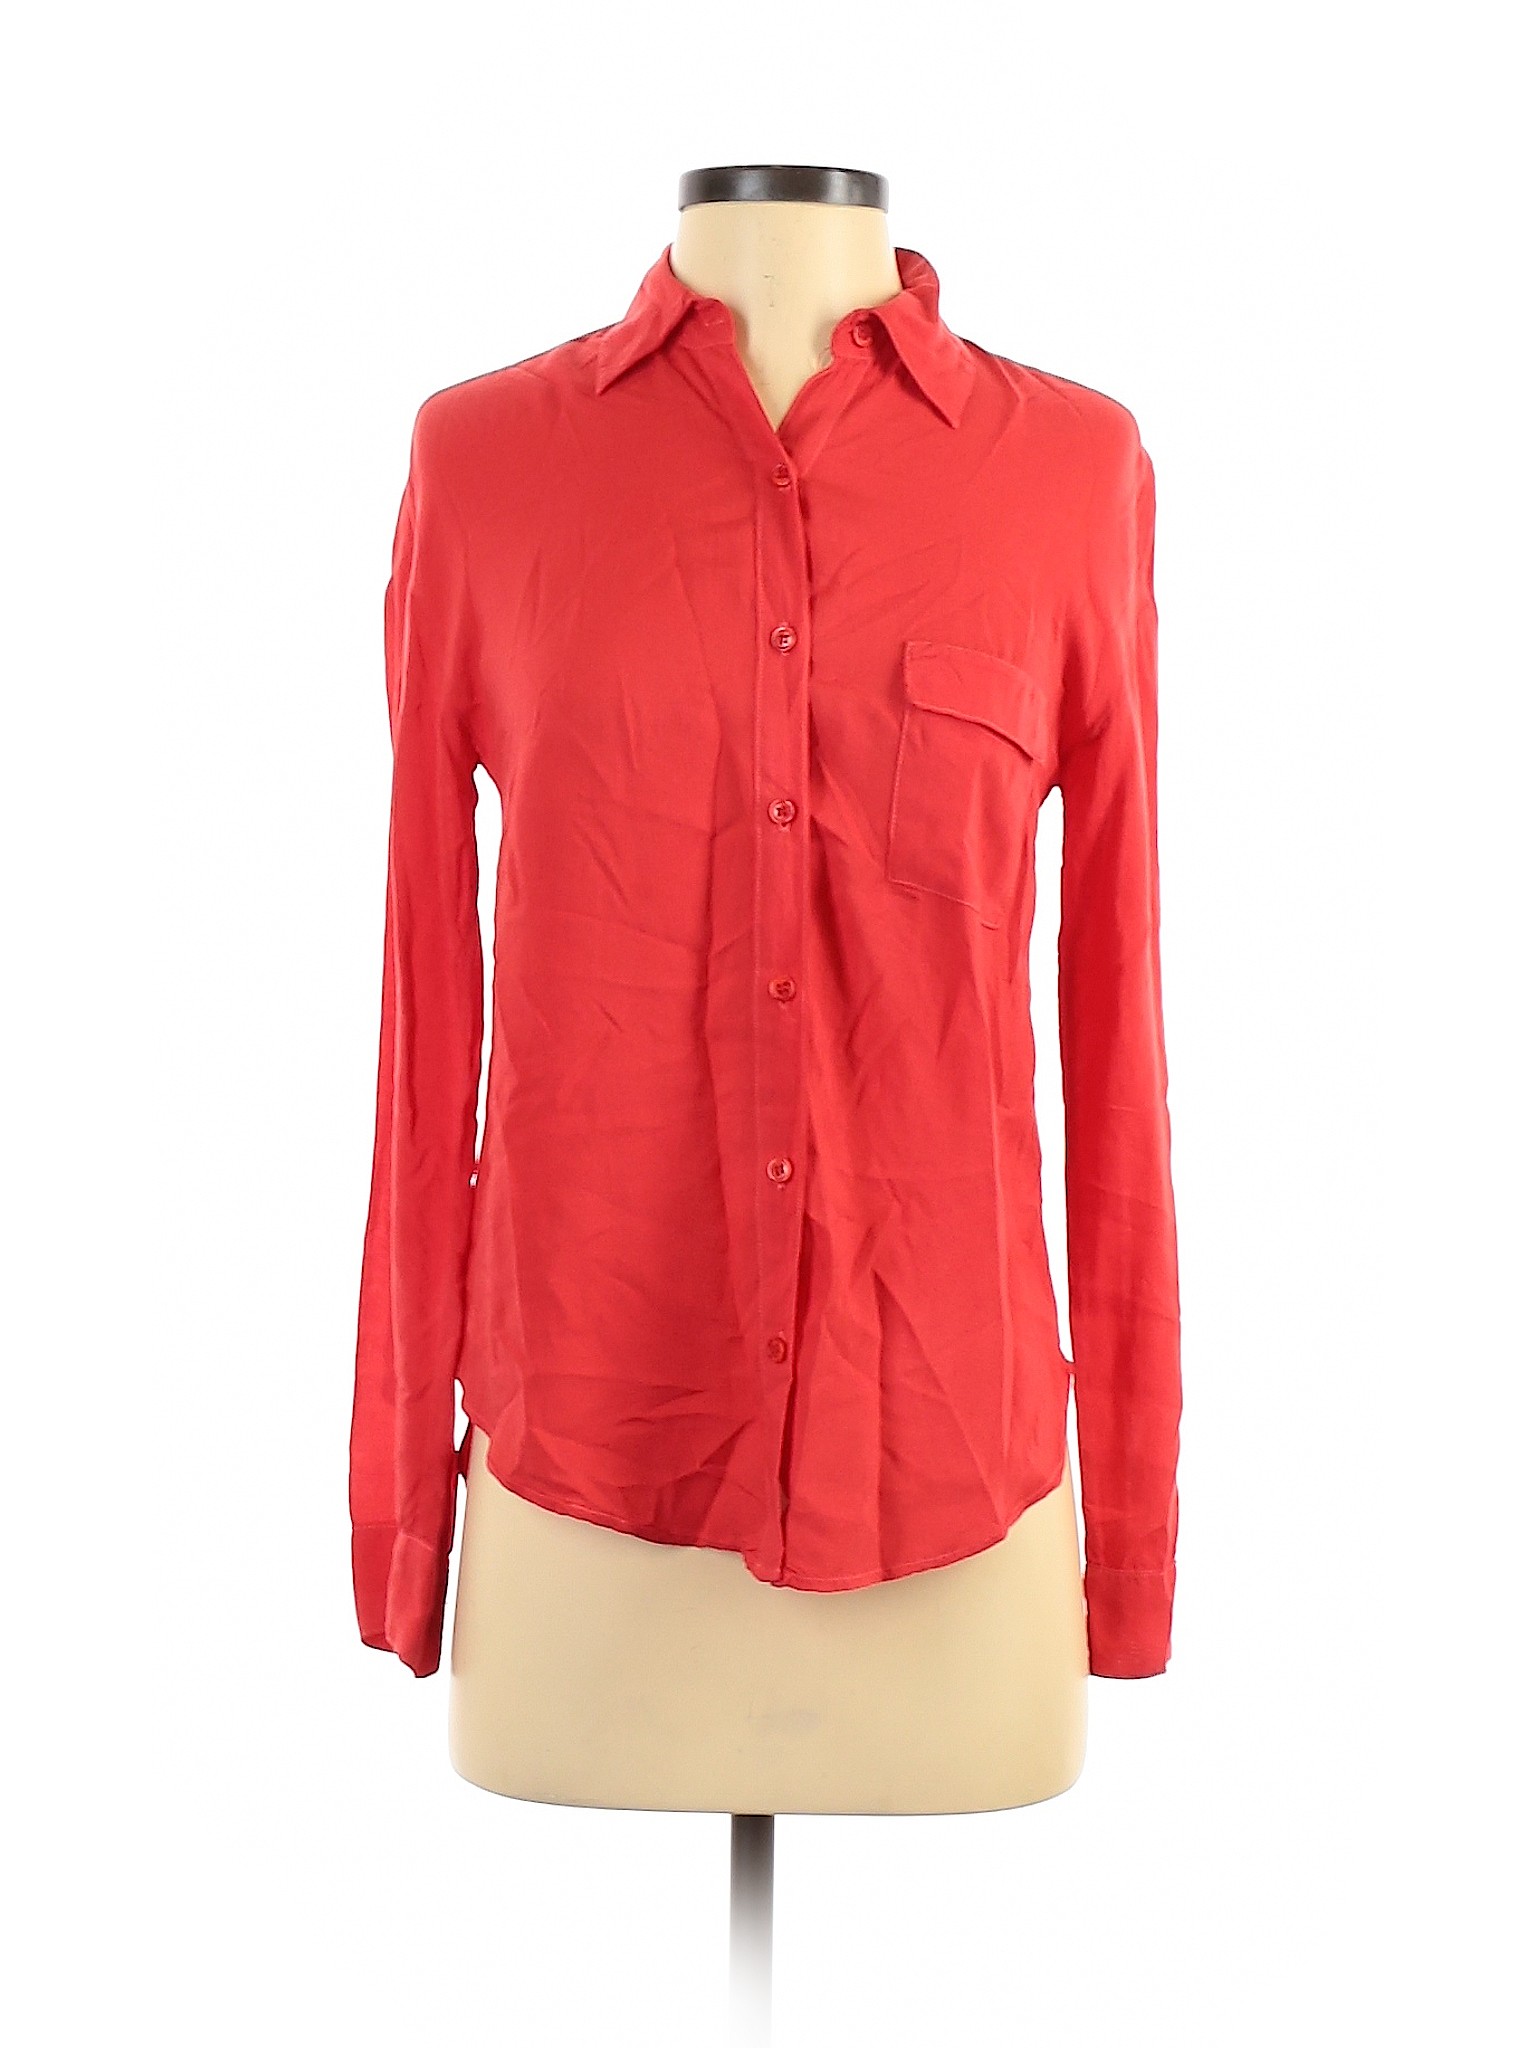 Splendid Women Red Long Sleeve Button-Down Shirt XS | eBay